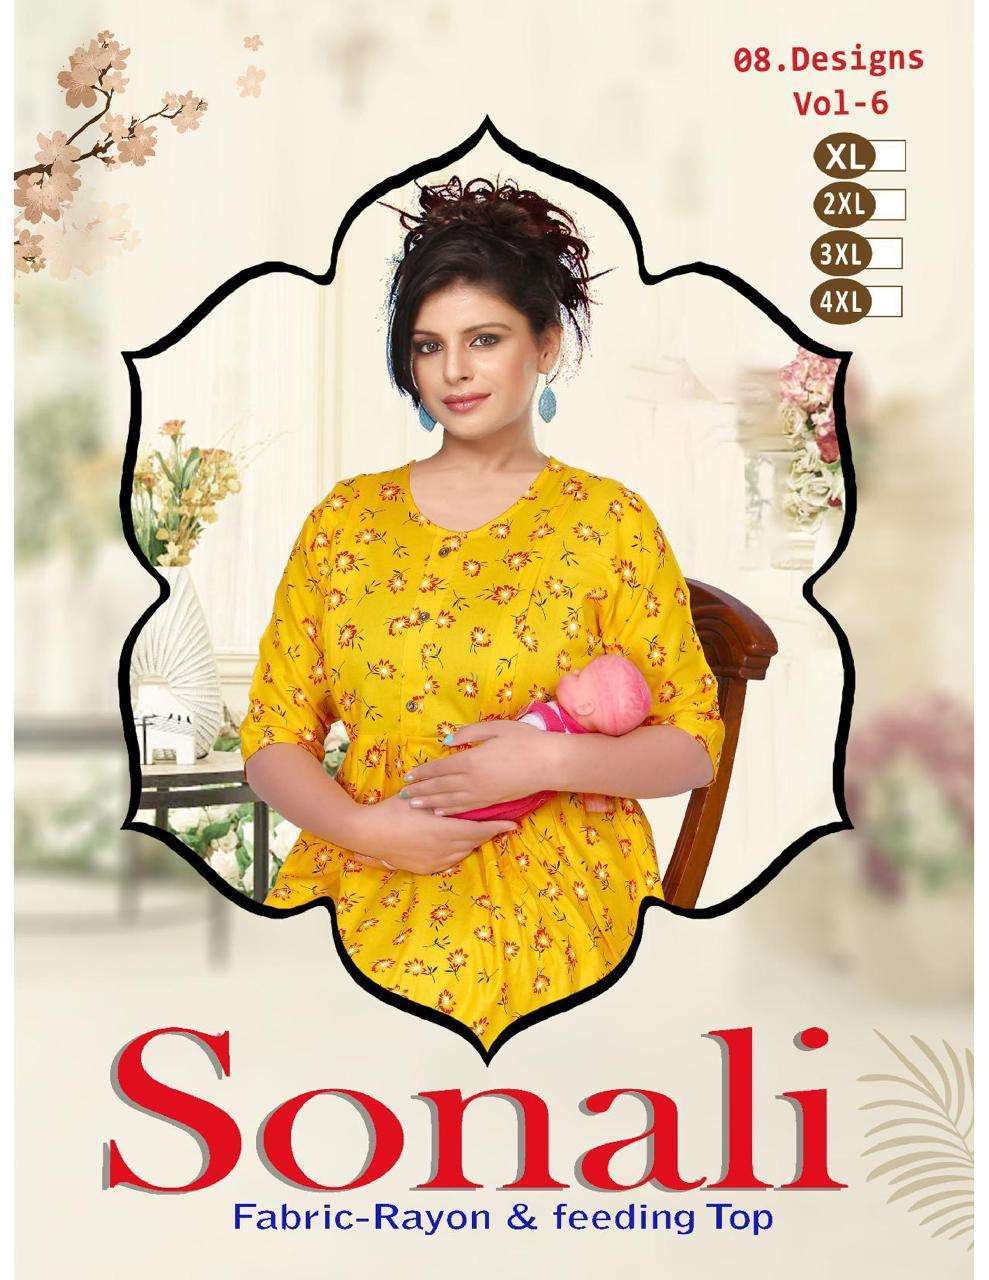 beauty queen sonali series 601-610 rayon print kurti 